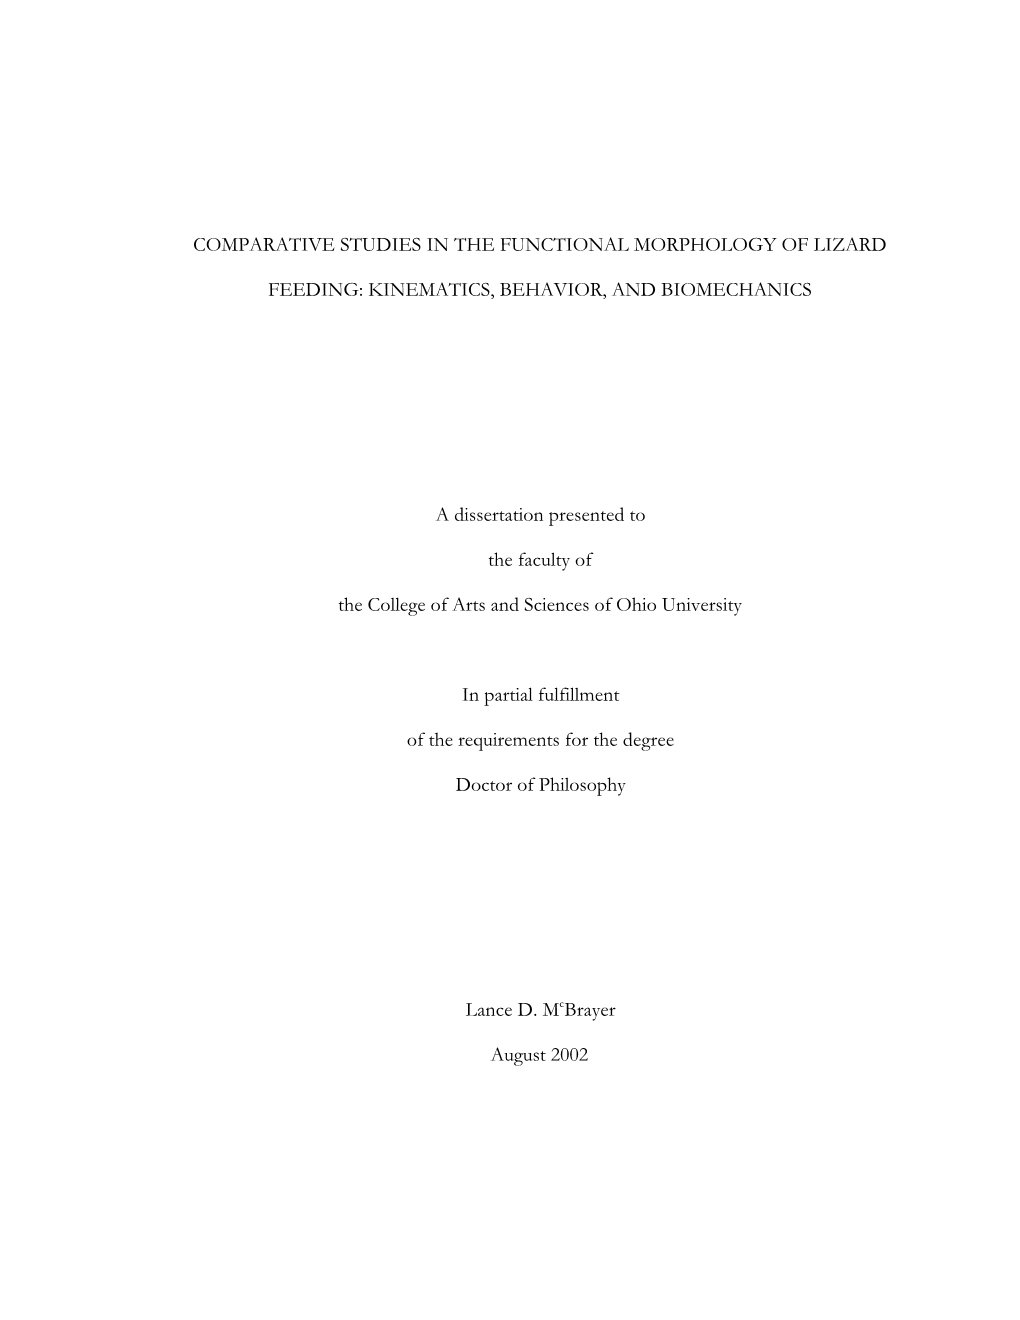 KINEMATICS, BEHAVIOR, and BIOMECHANICS a Dissertation